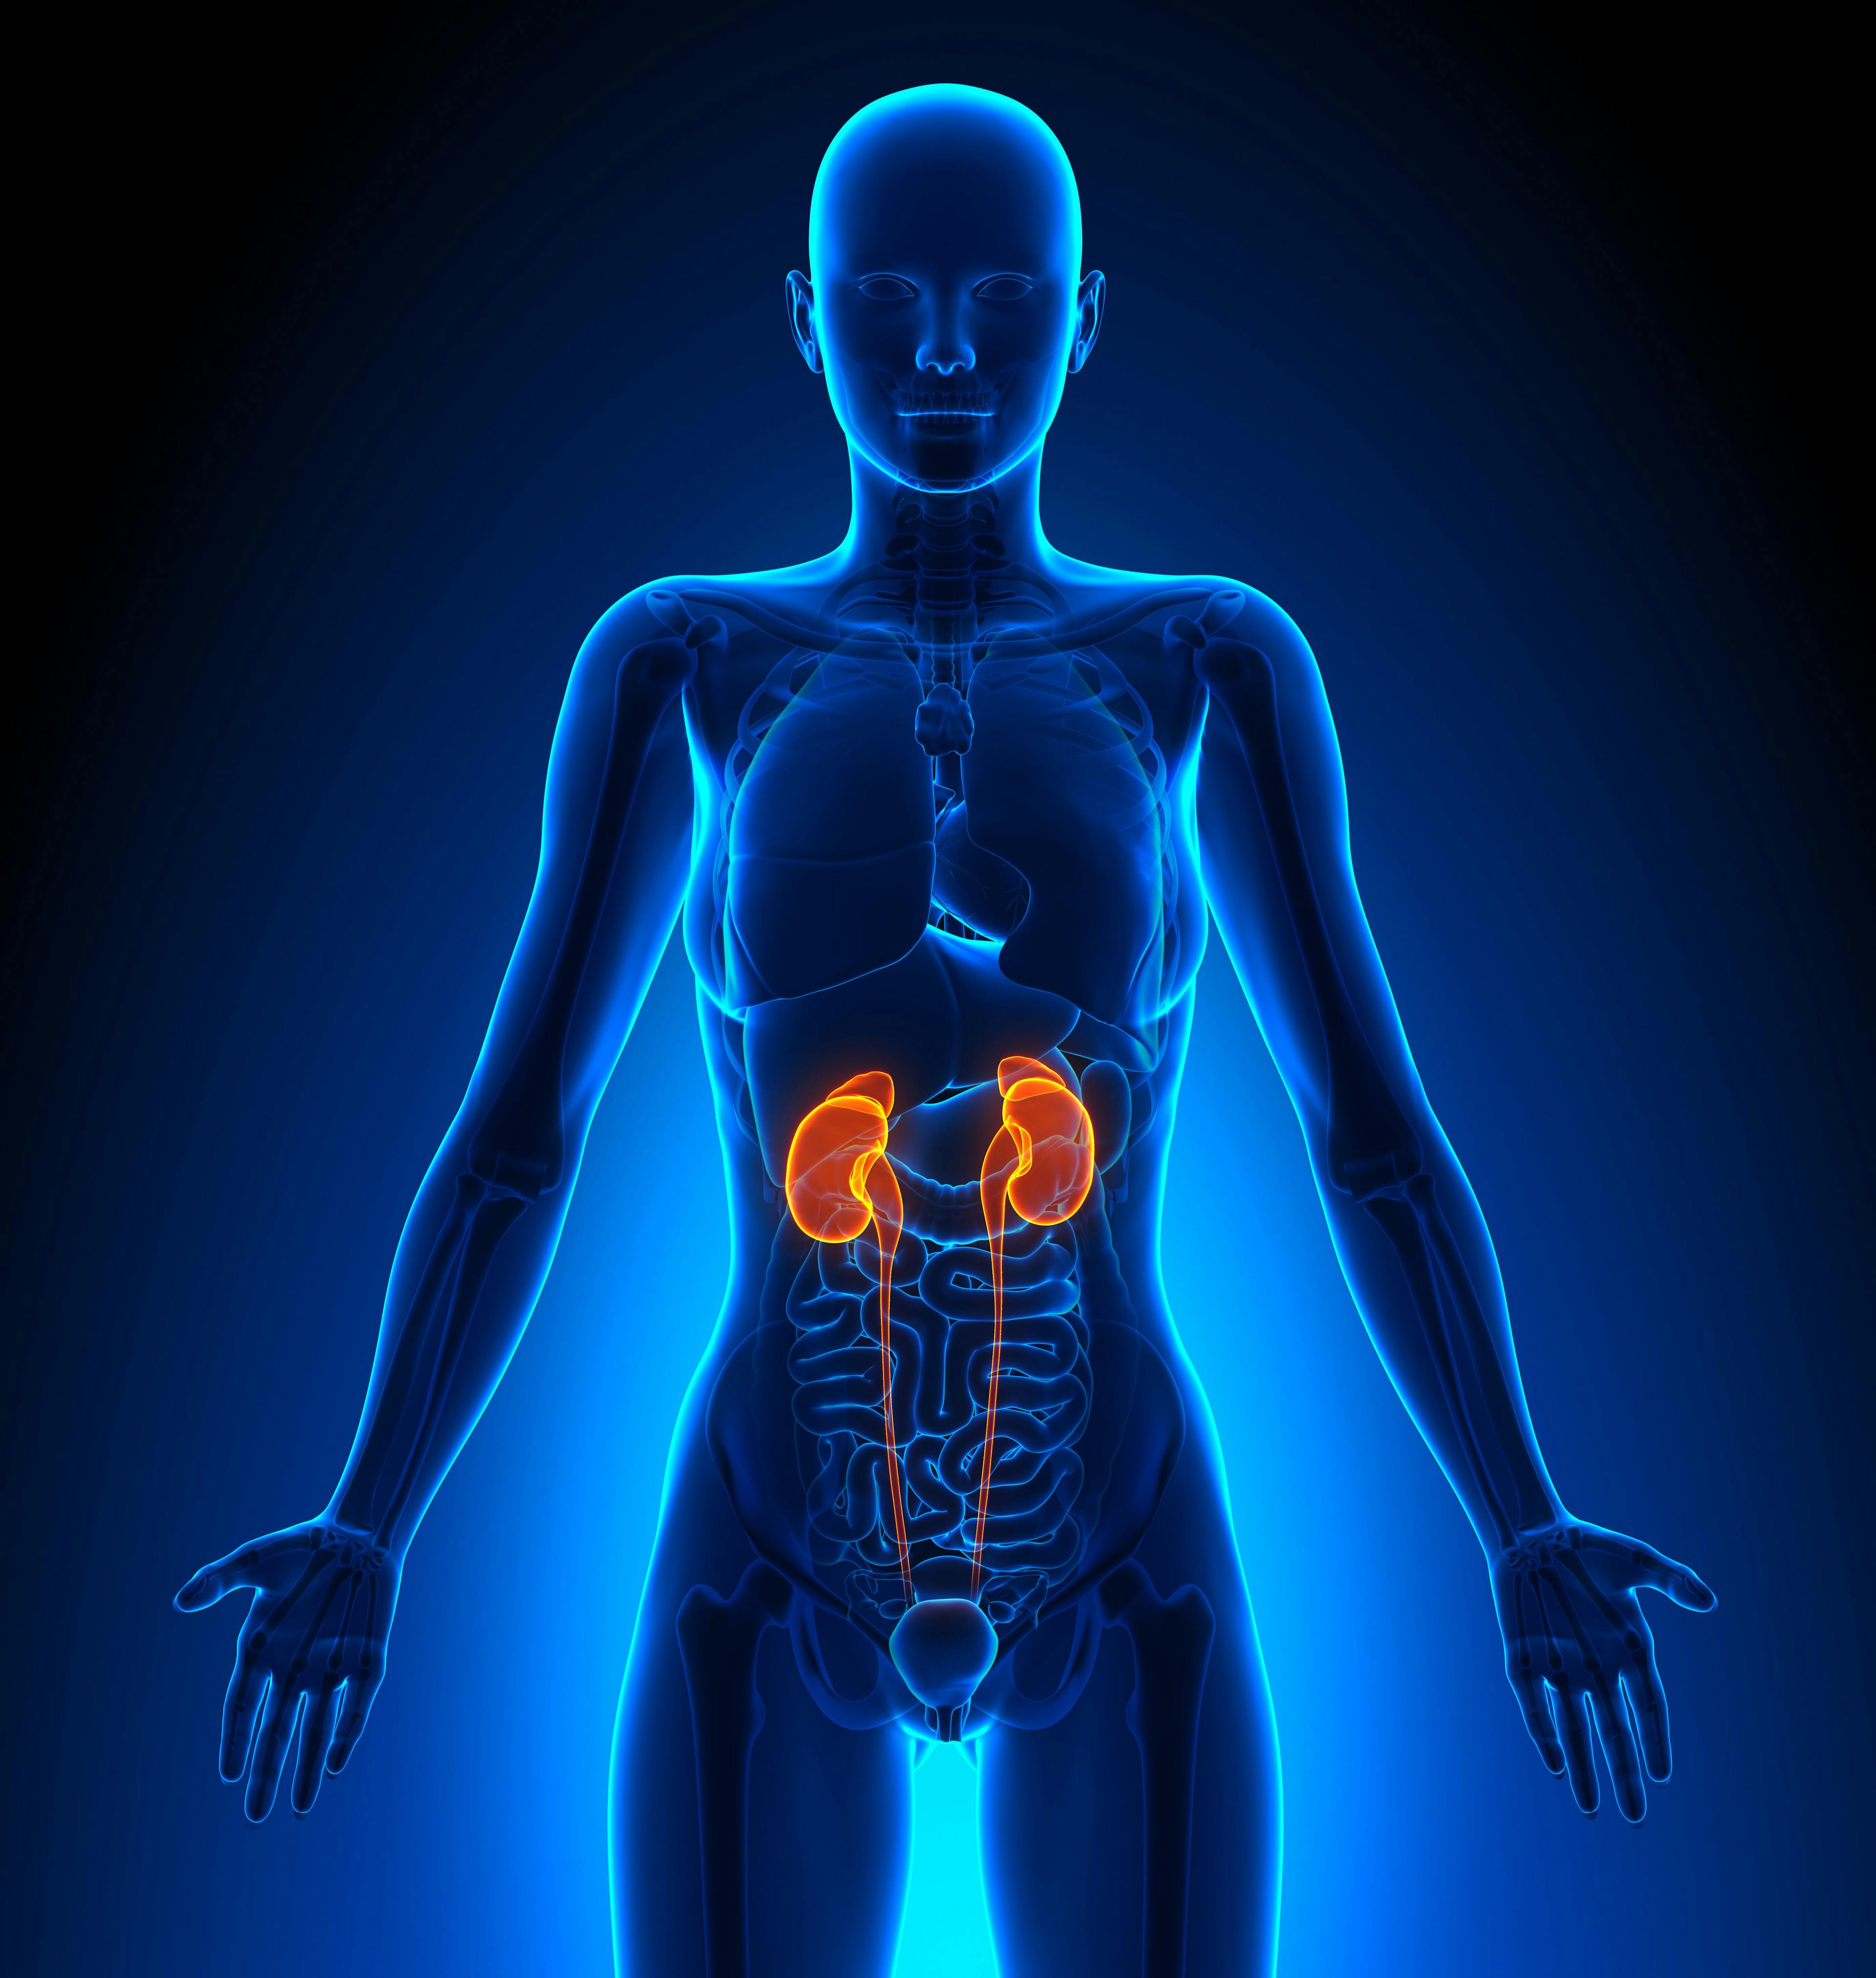 Illustration of human kidneys